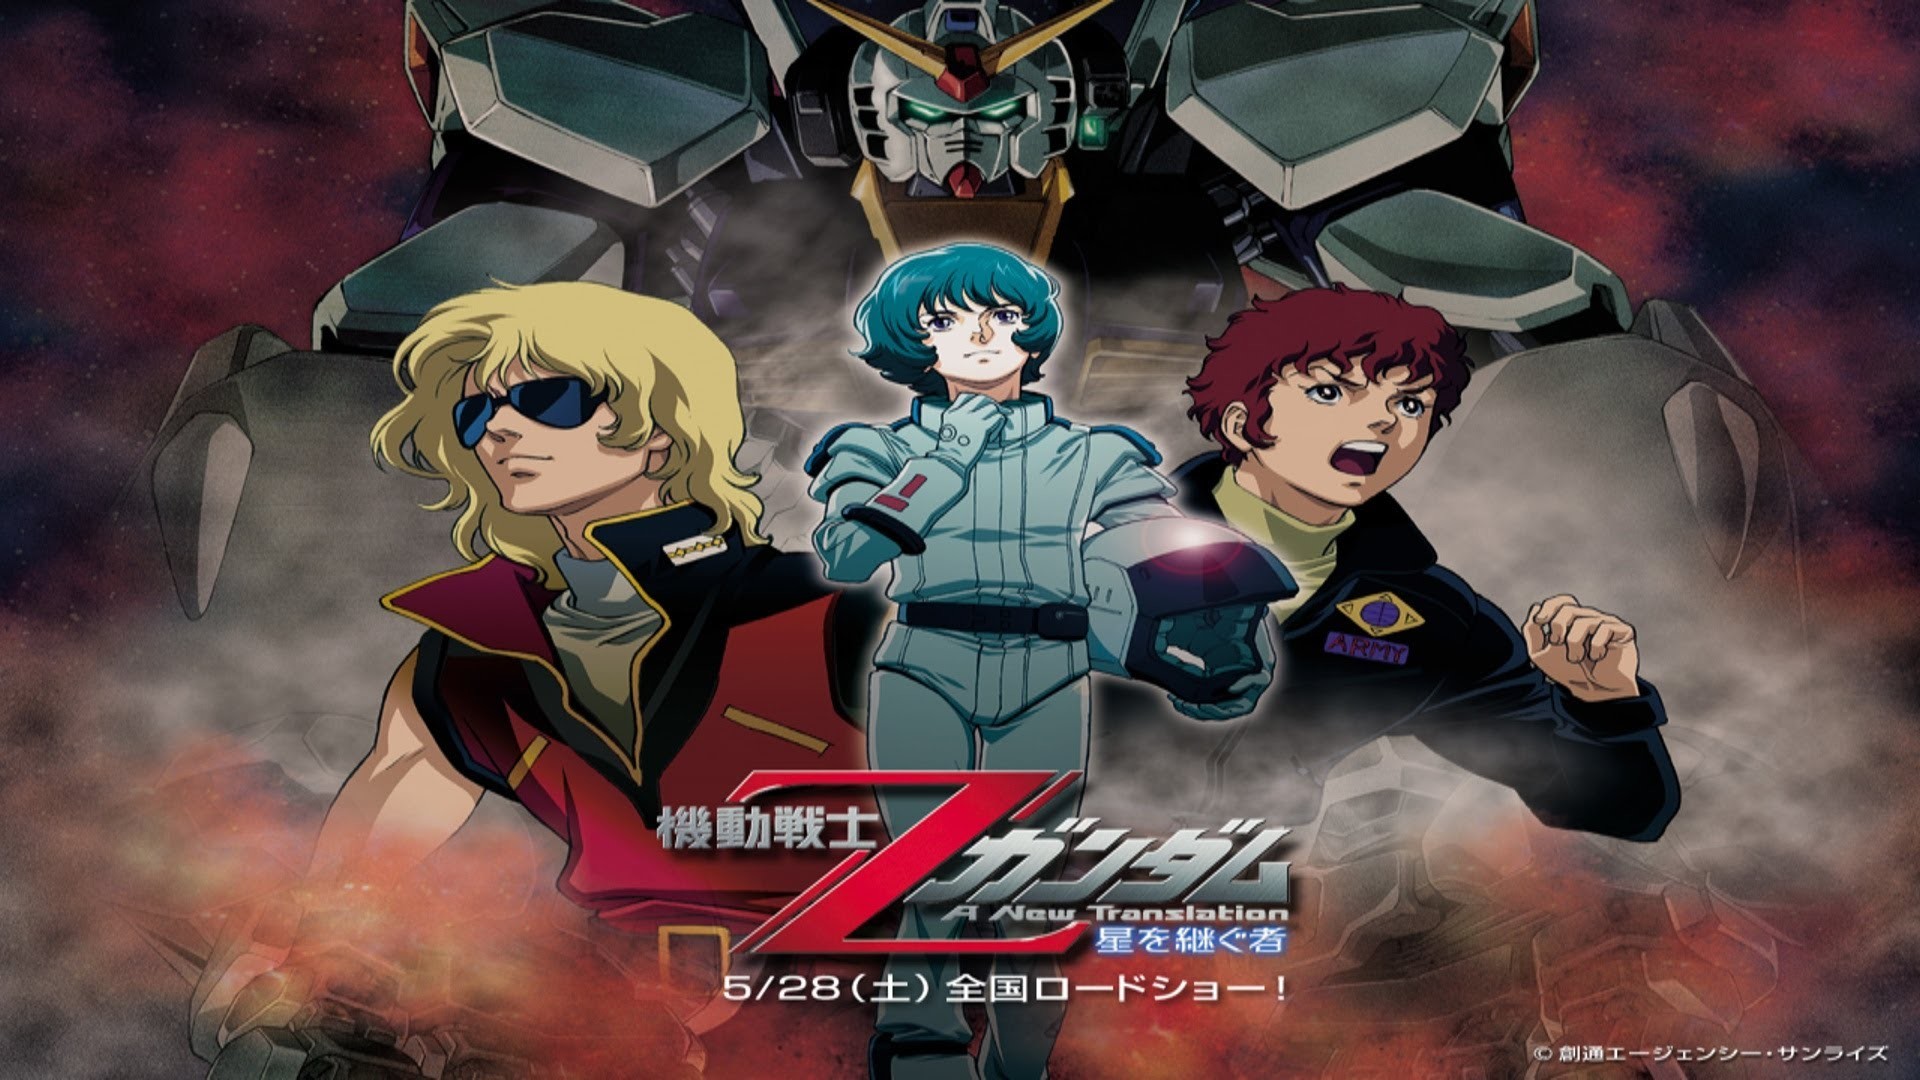 1920x1080 Dynasty Warriors: Gundam 3 - MS Zeta Gundam: A New Translation - Love is  the Pulse of the Stars - YouTube